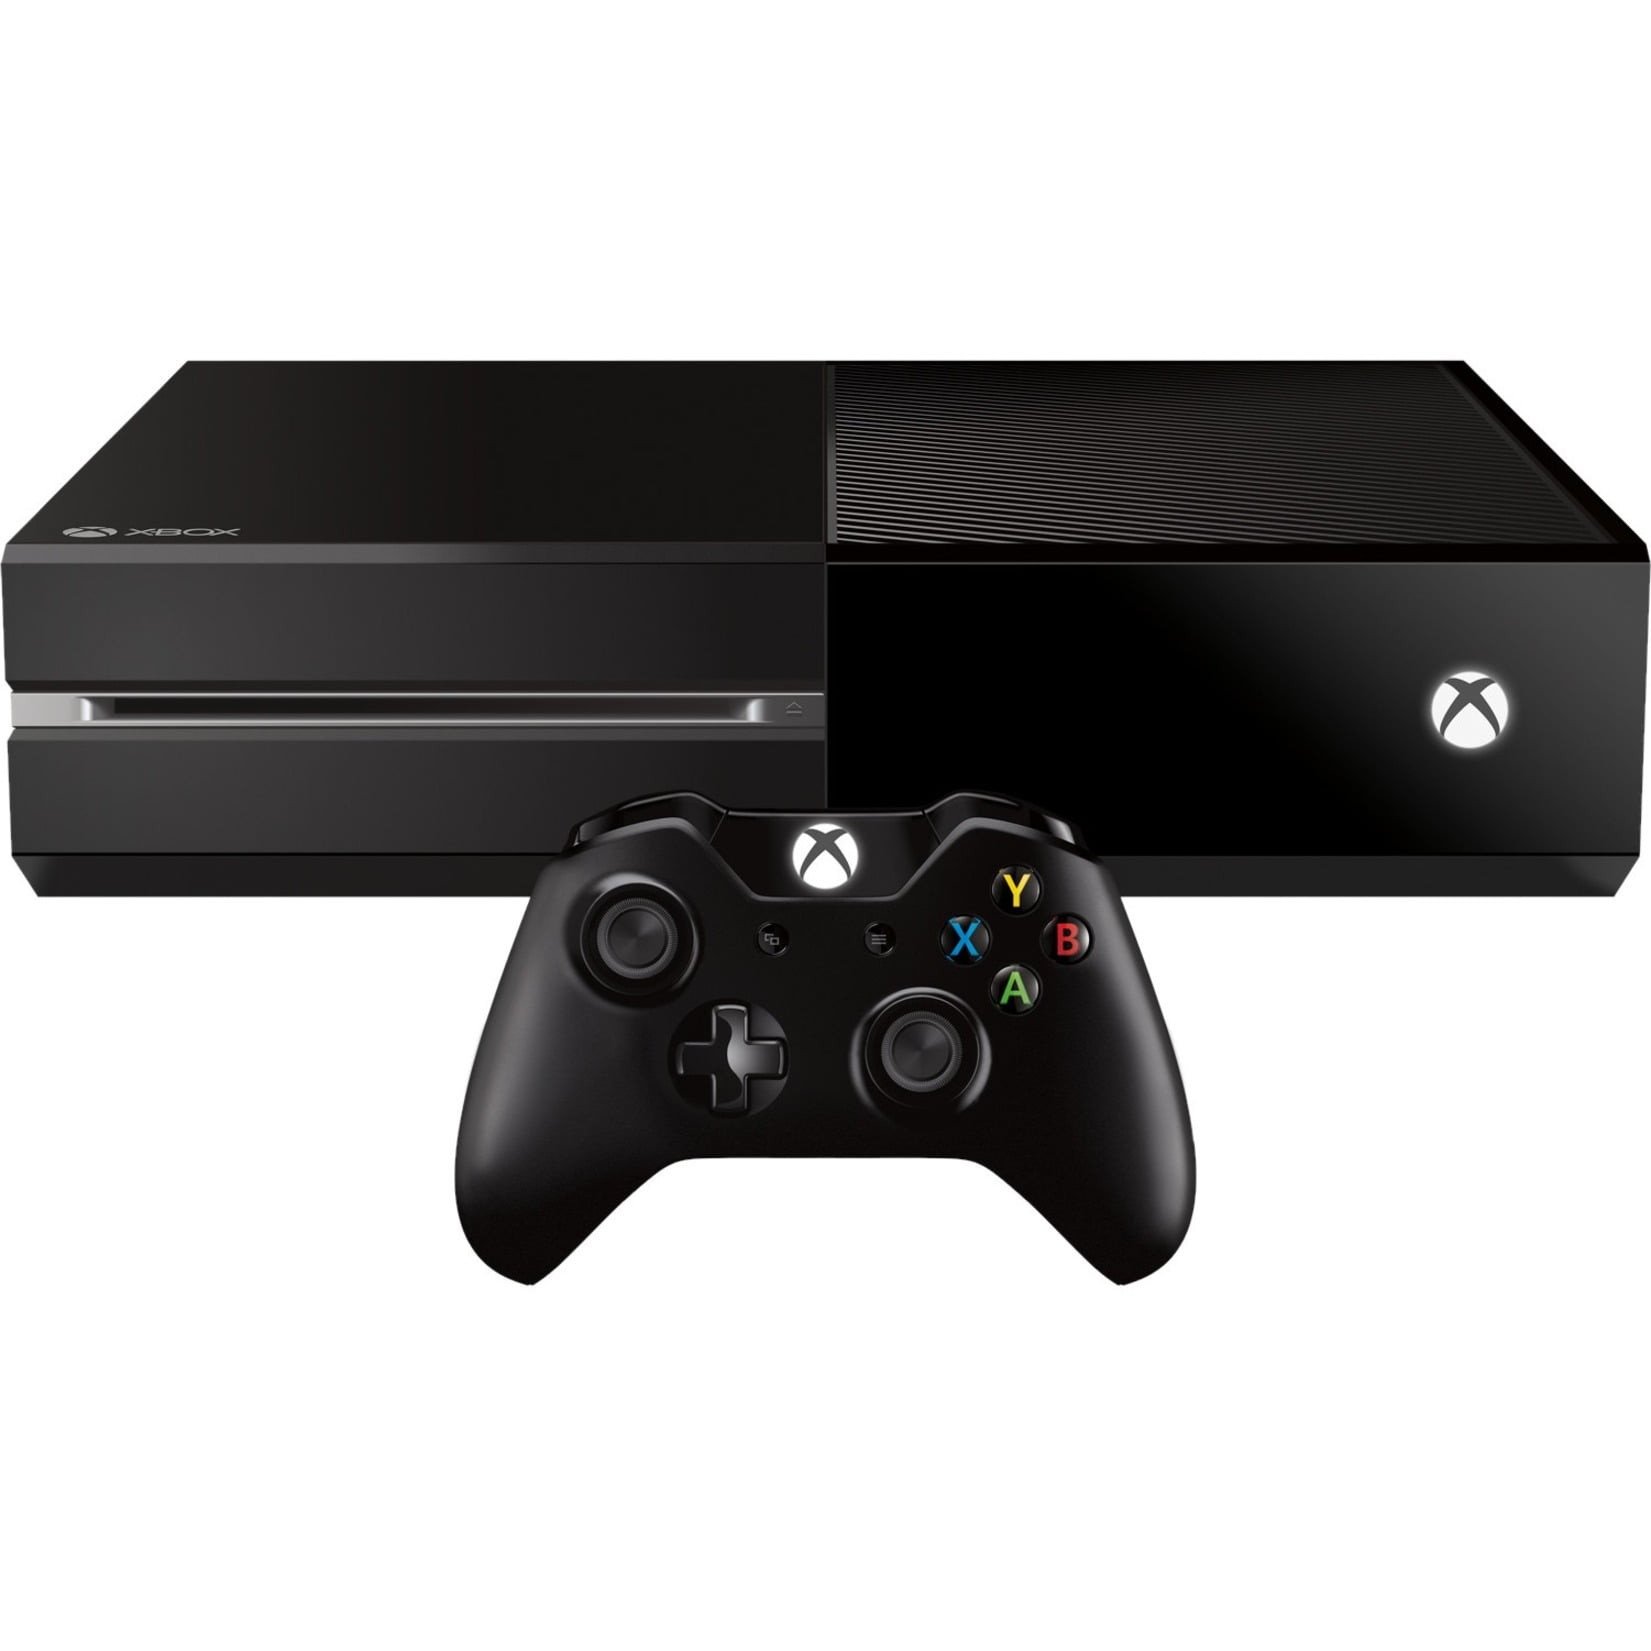 With Xbox One X sale starts on Nov 7, Microsoft says Good bye to